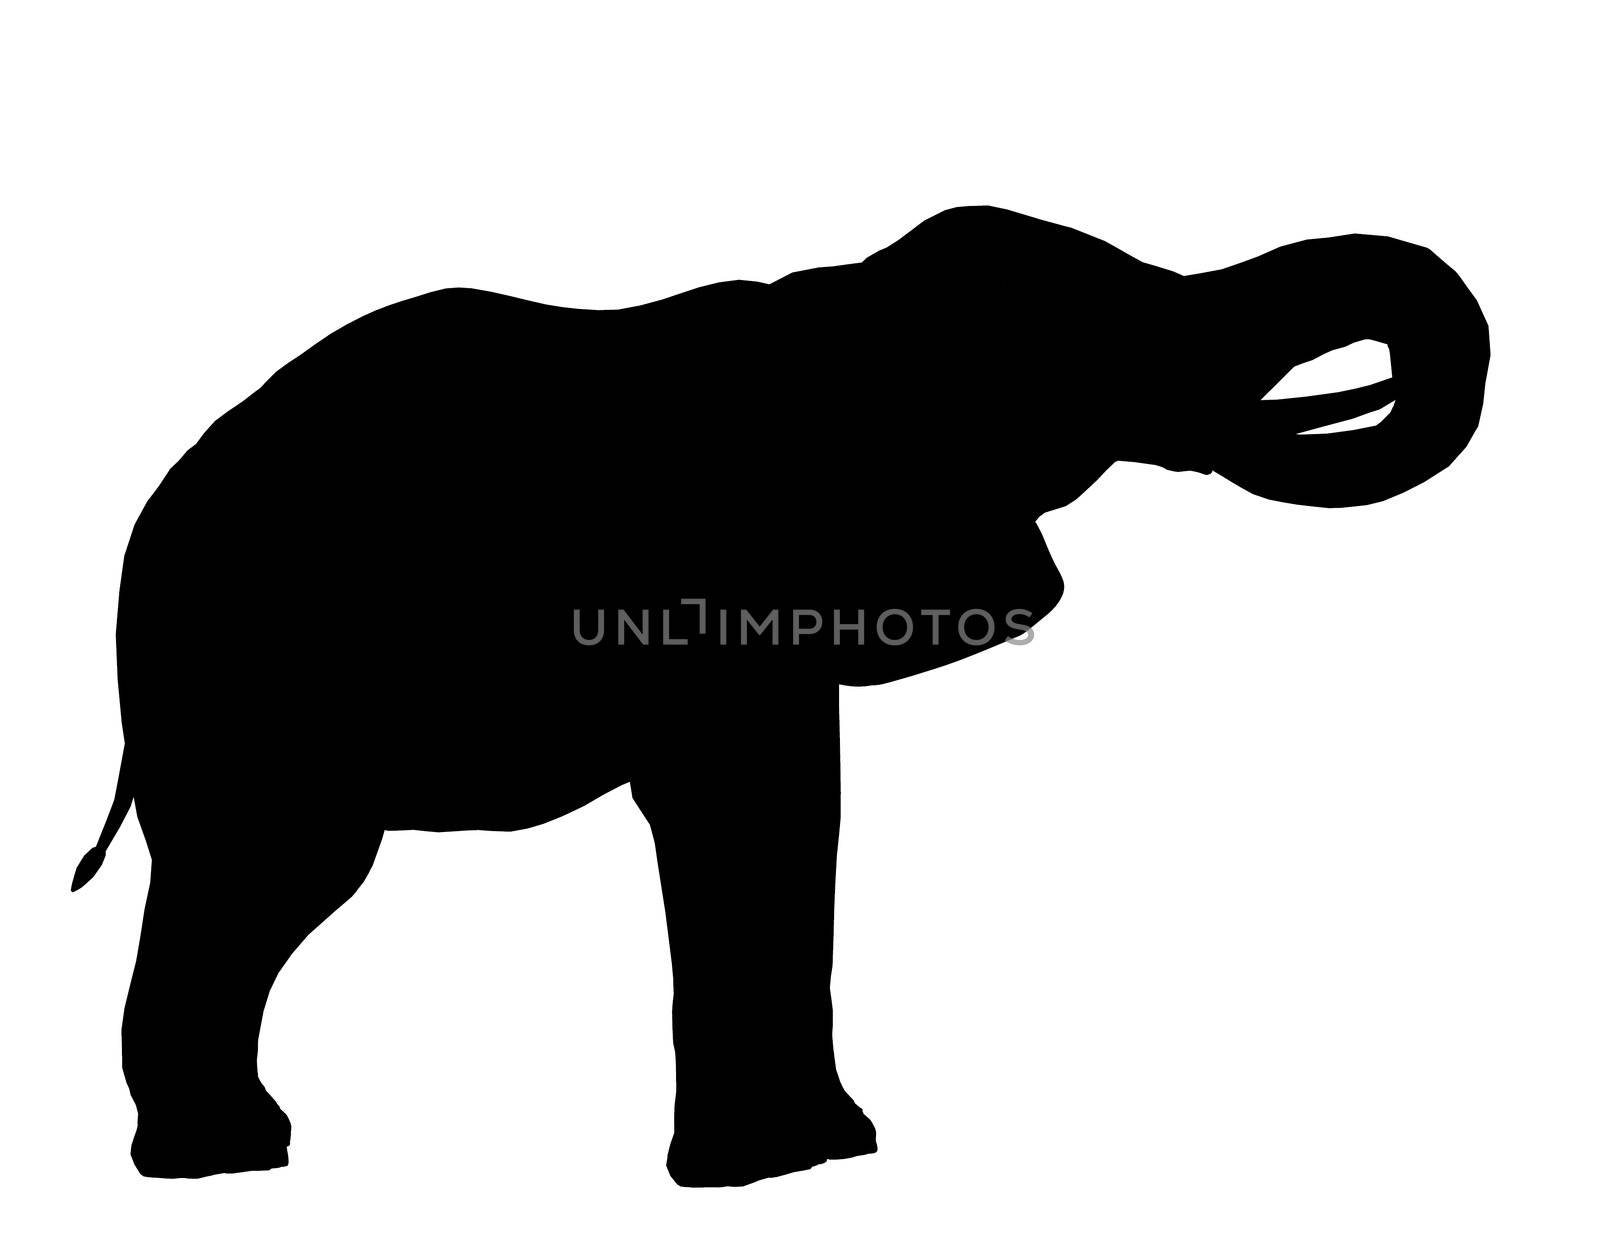 Black elephant art illustration silhouette on a white background